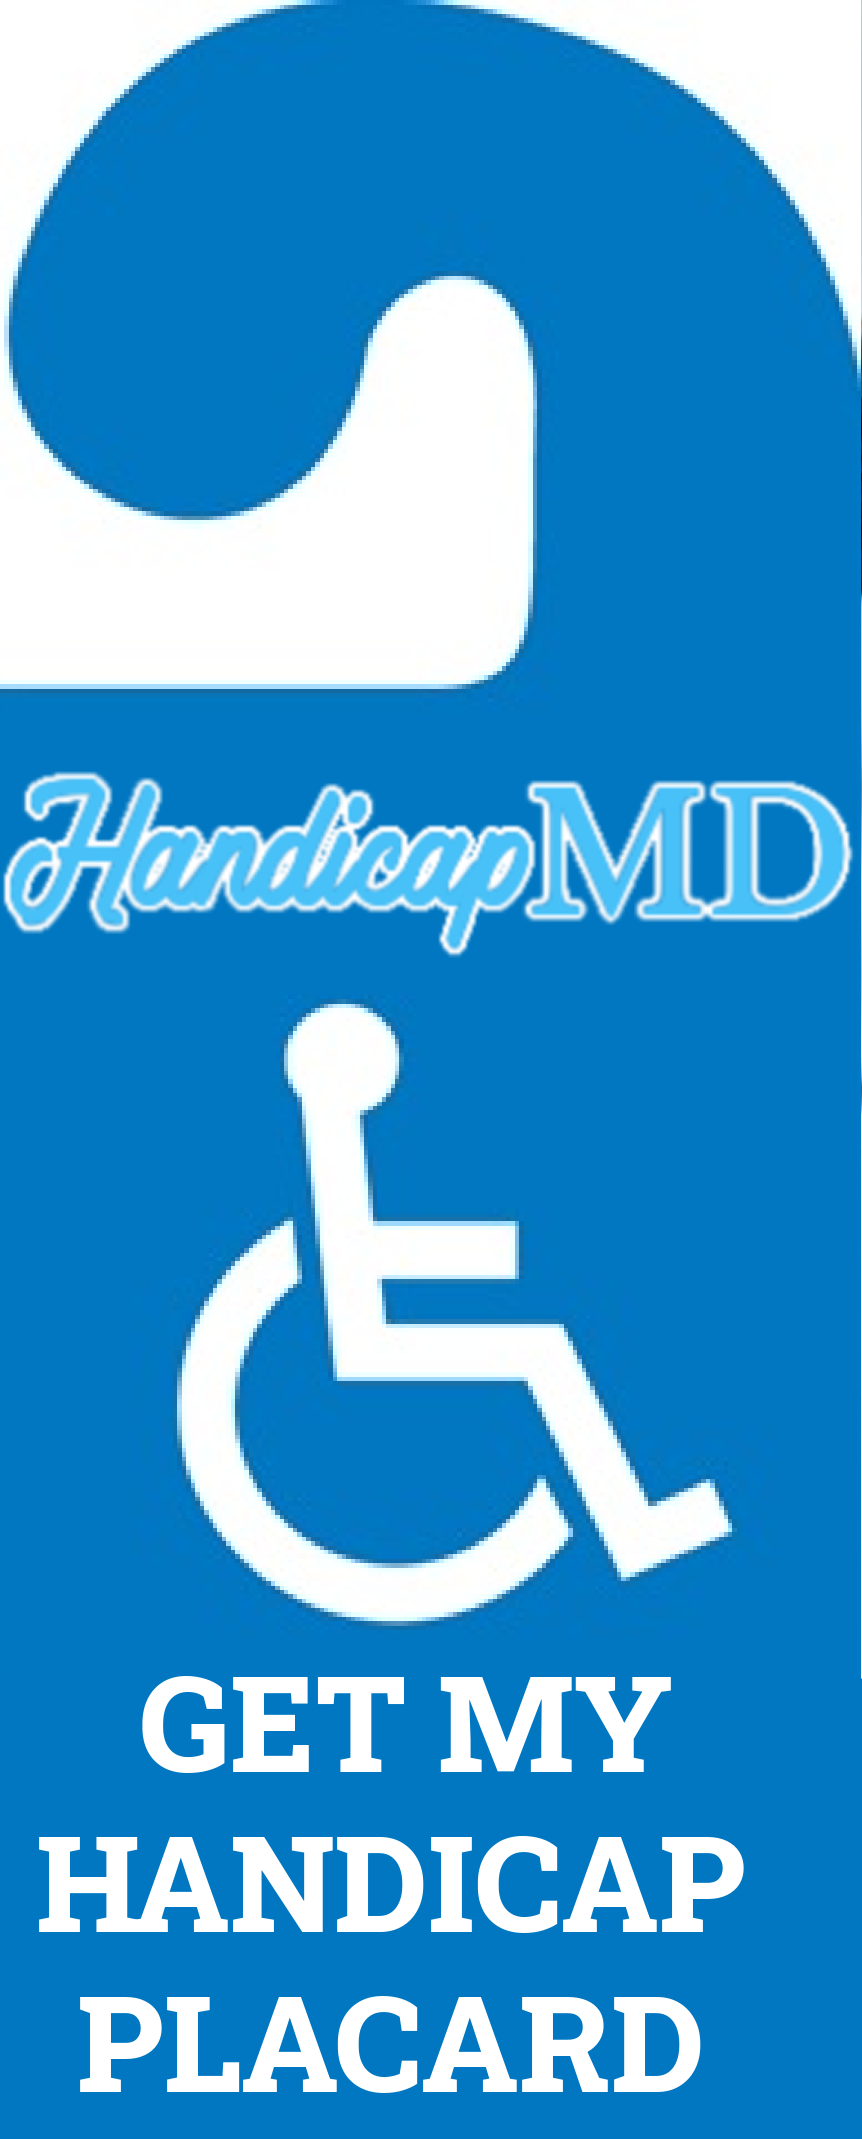 Mississippi Handicap Parking Placards